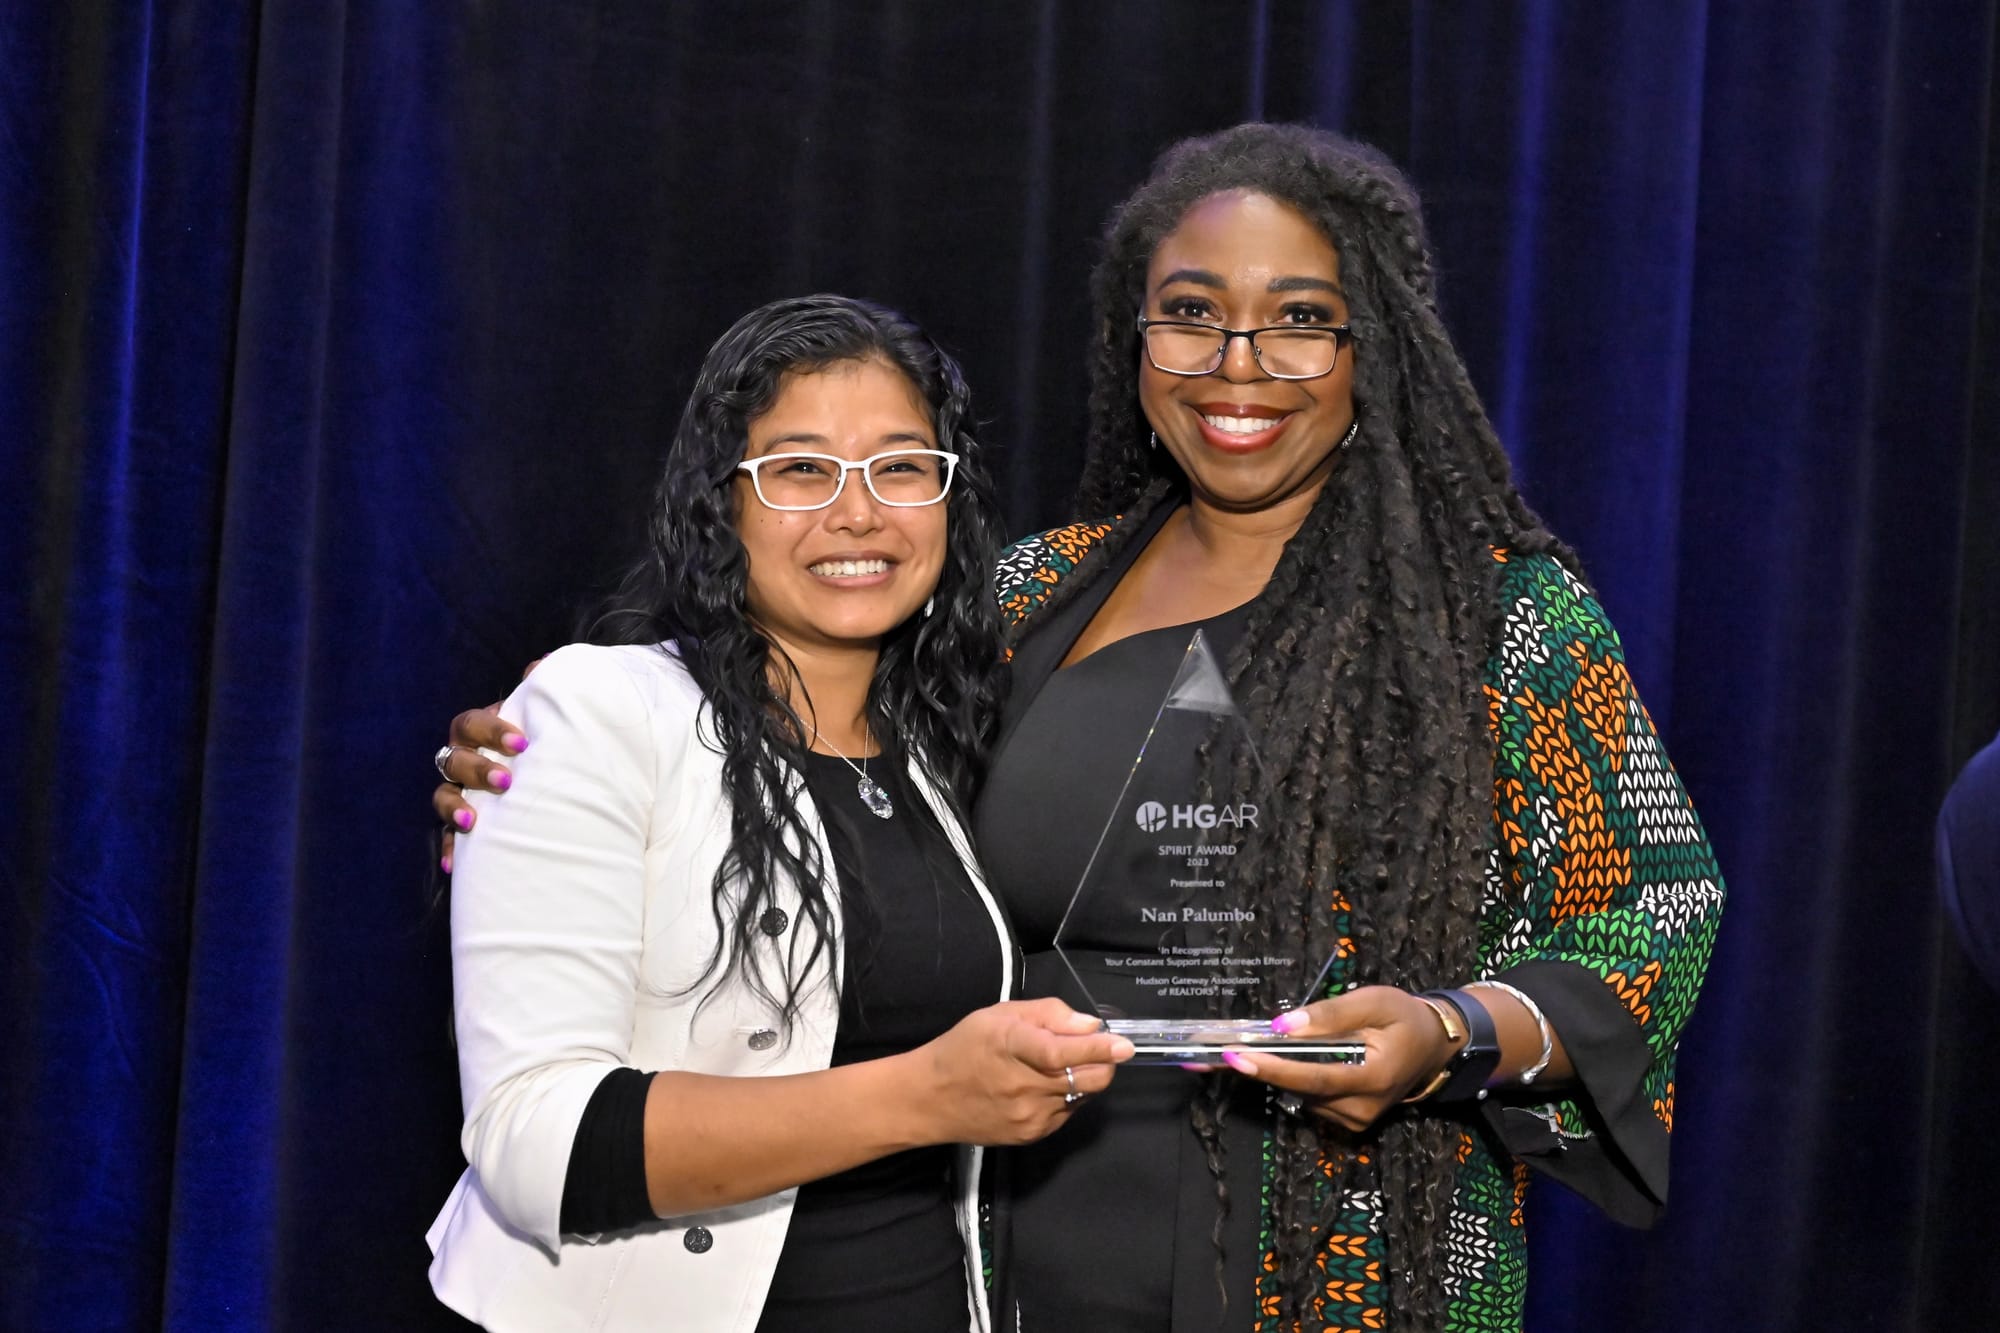 Nan Palumbo, left, winner of HGAR’s “Spirit Award” and Crystal Hawkins-Syska, HGAR Recognition Committee Chair